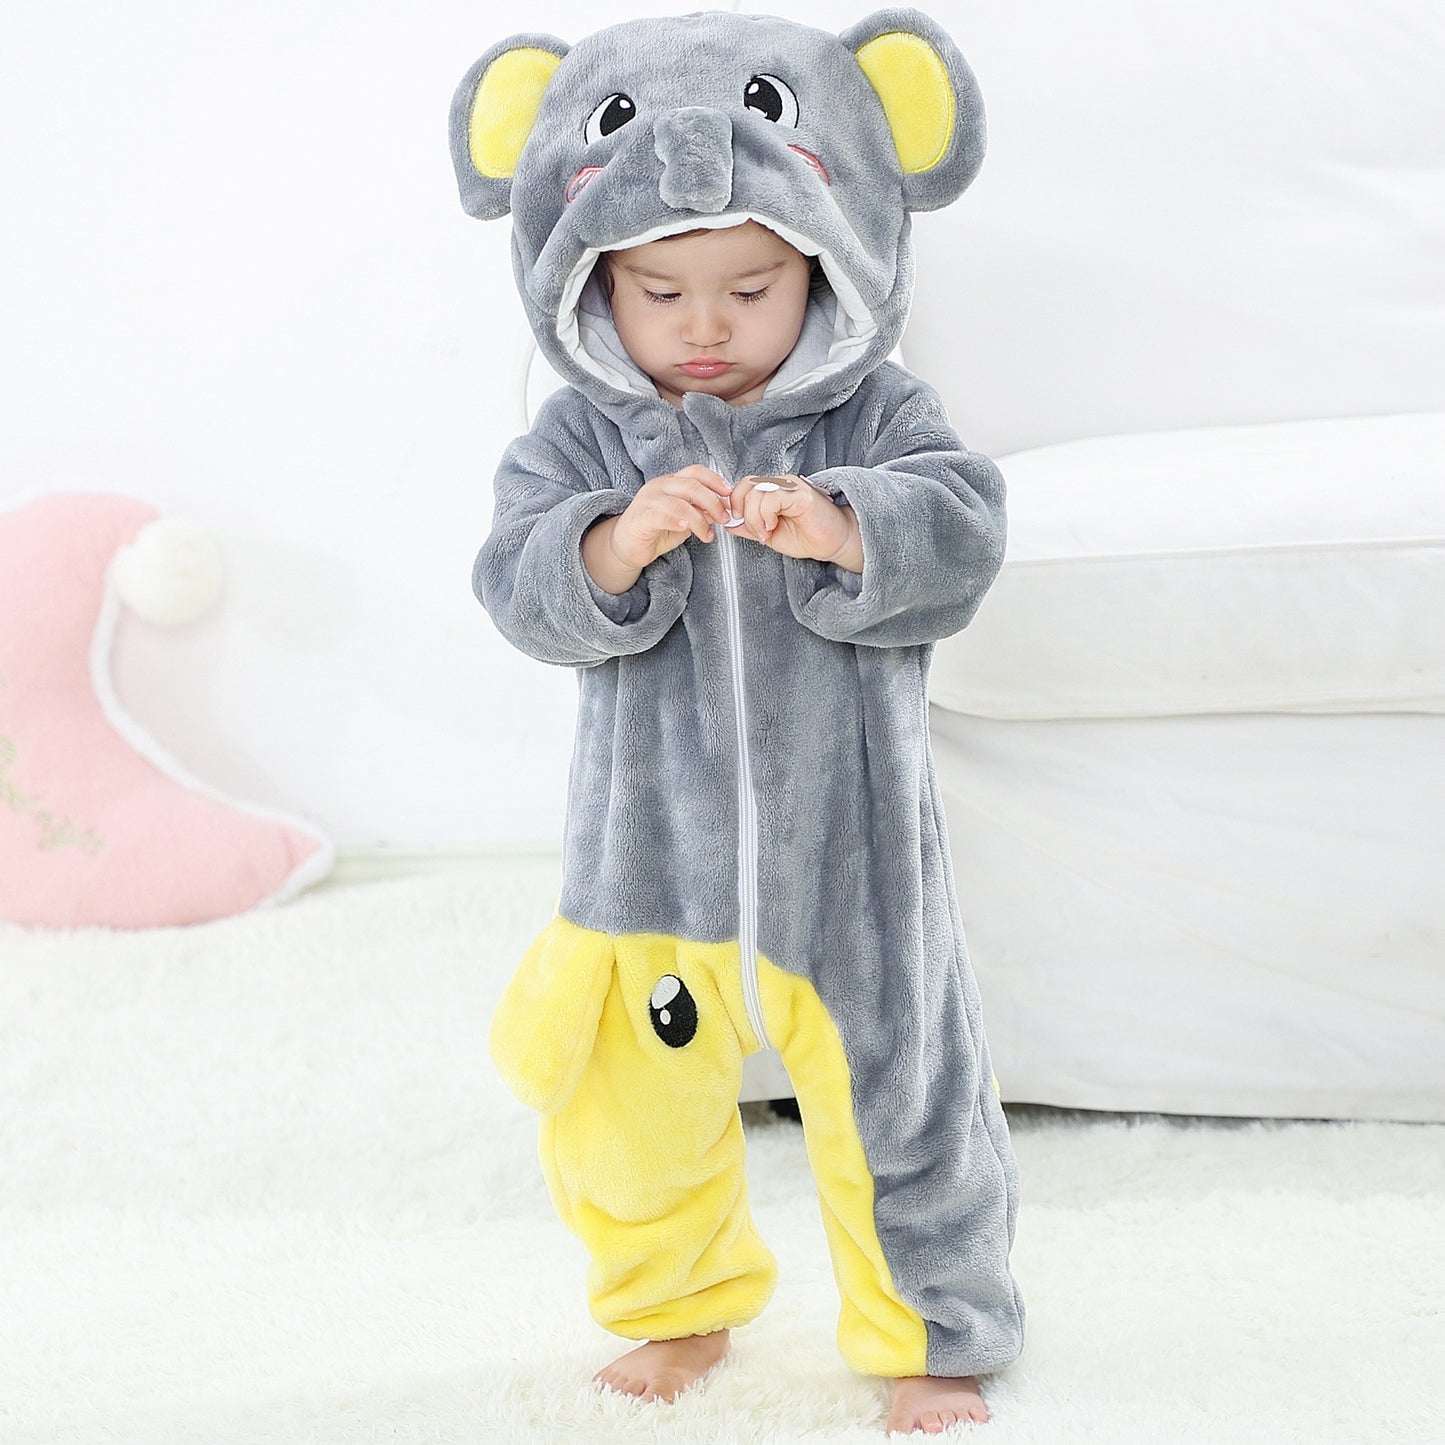 Pijama/disfraz 0-12 meses de diversos animales